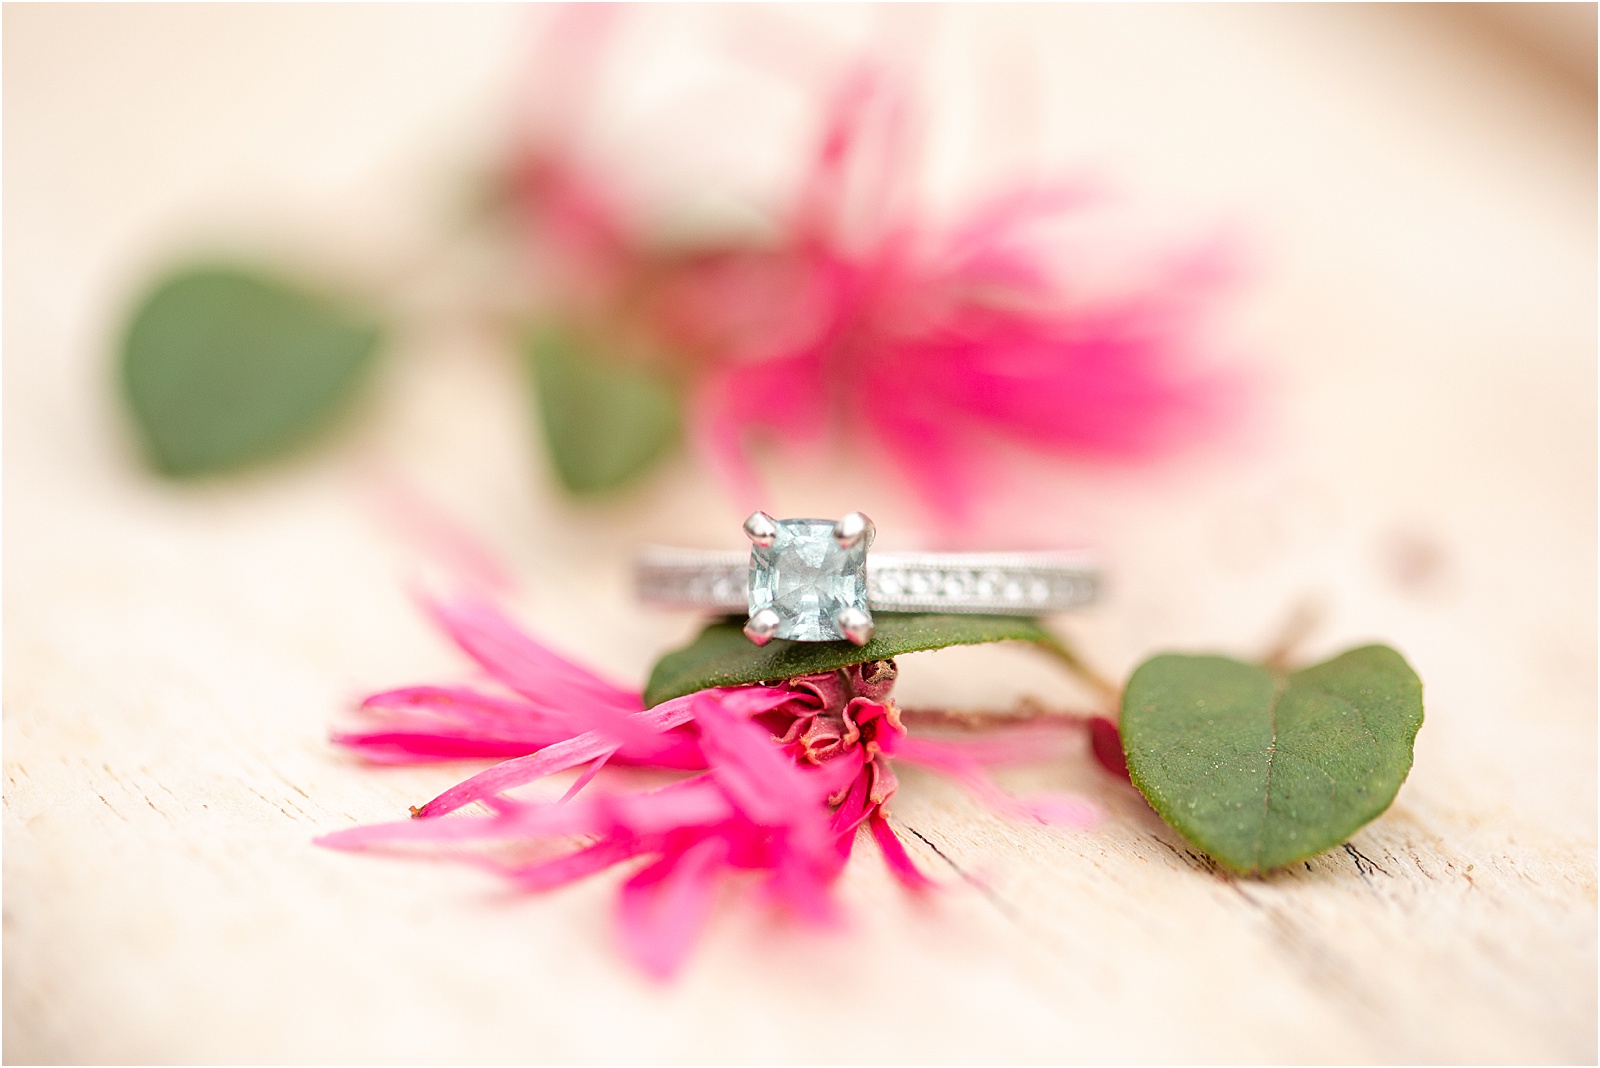 Diamond ring in pink flowers